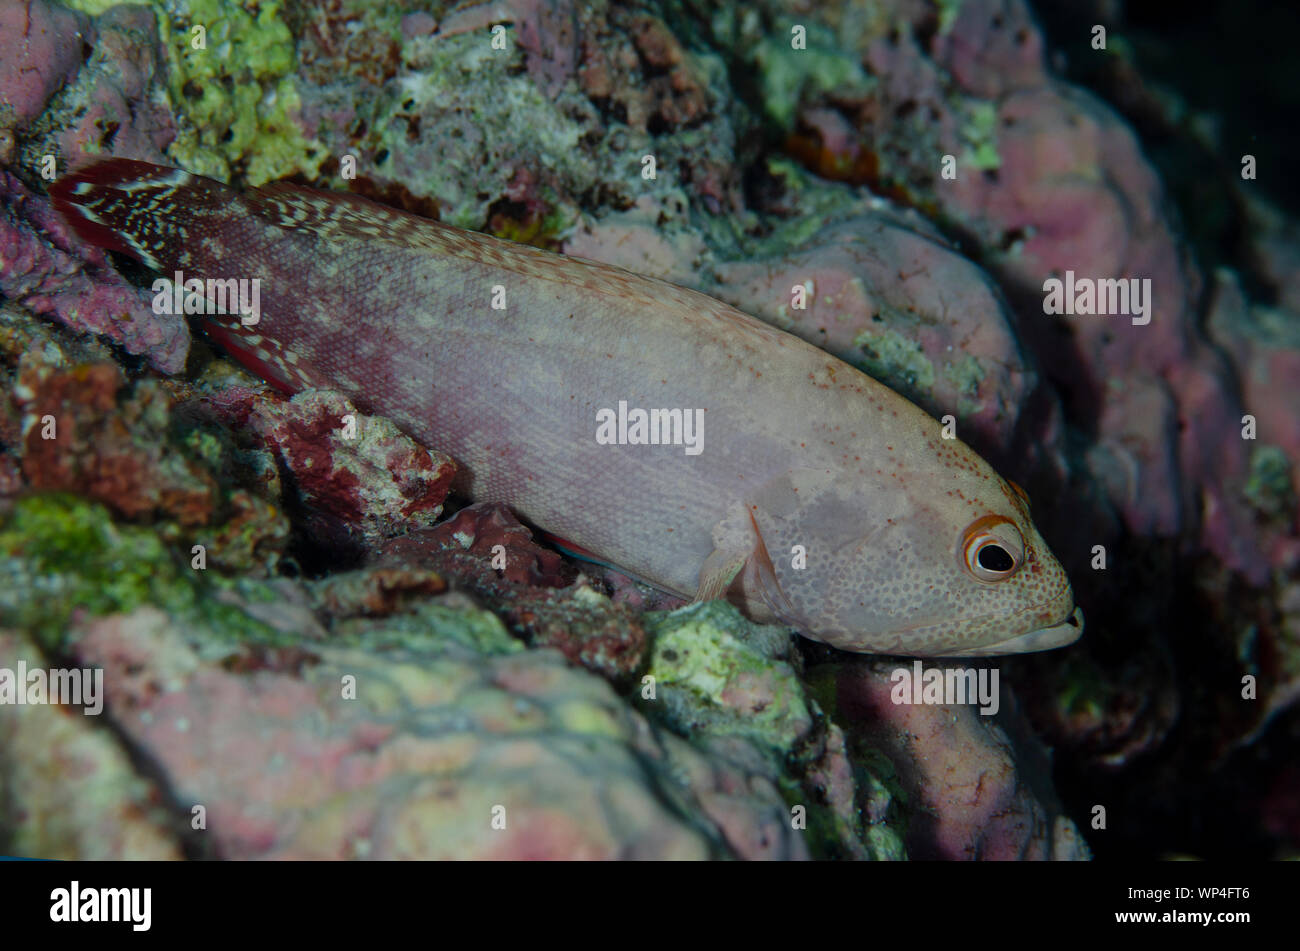 Darkfin Grouper, Cephalophalis urodeta, site de plongée Karang Hatta, îles Banda, Maluku, Indonésie Banque D'Images